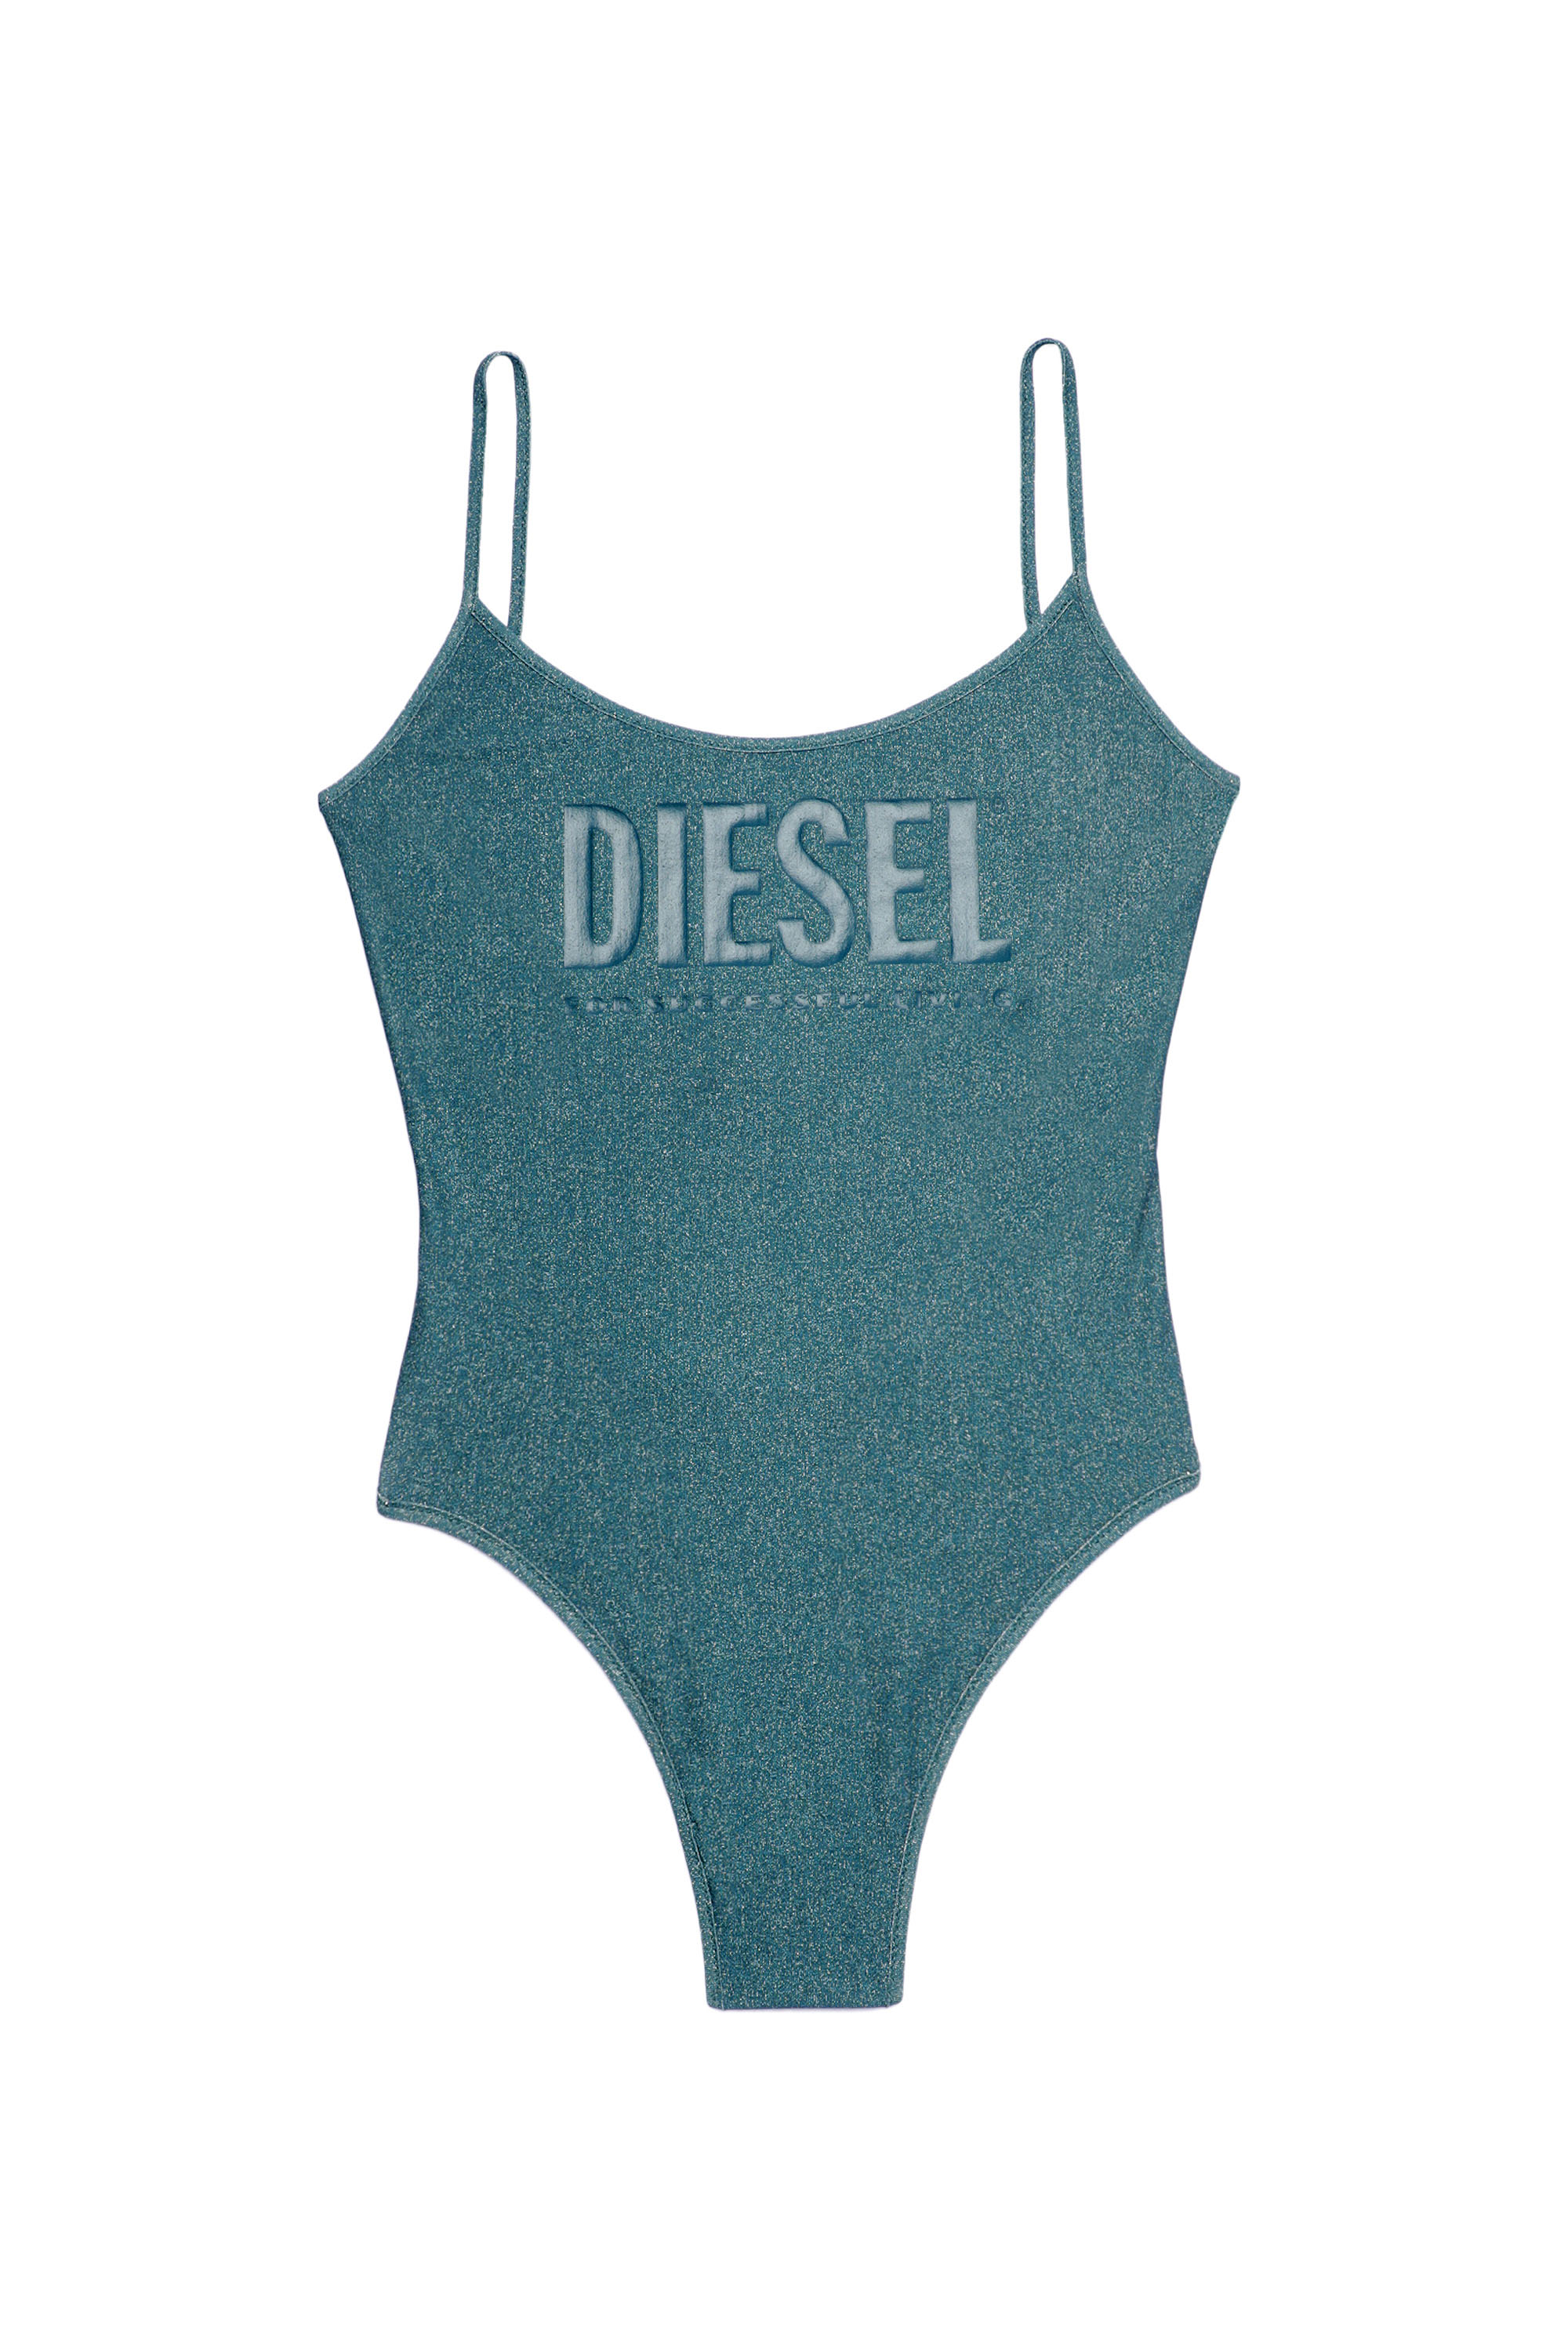 Diesel - BFSW-GRETEL, Blau - Image 1